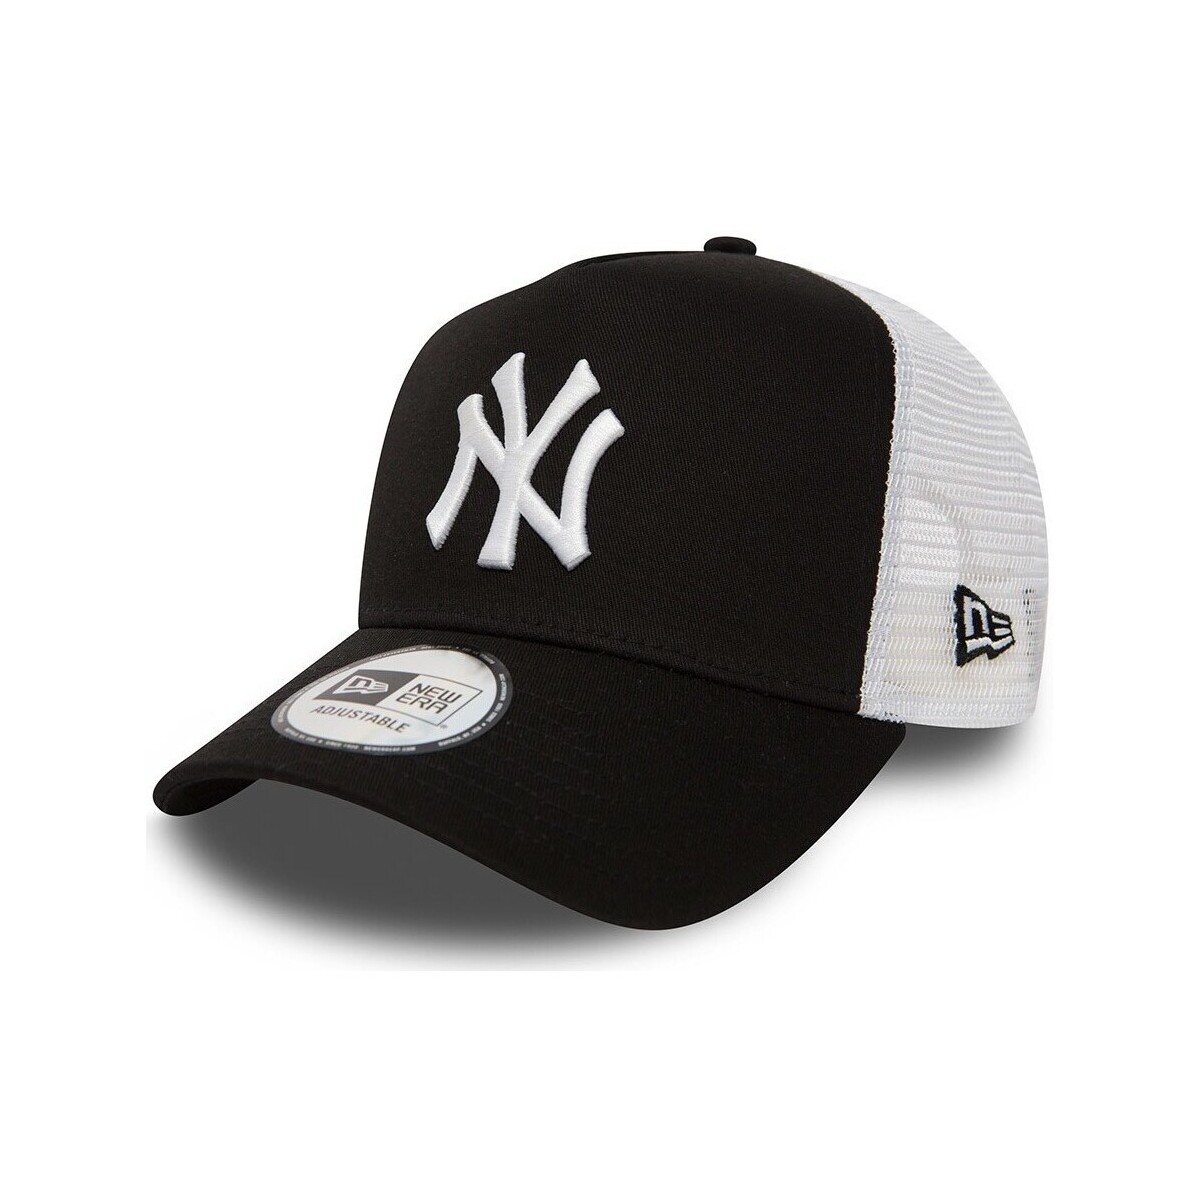 Clothes accessories Caps New-Era New York Yankees Clean A White, Black